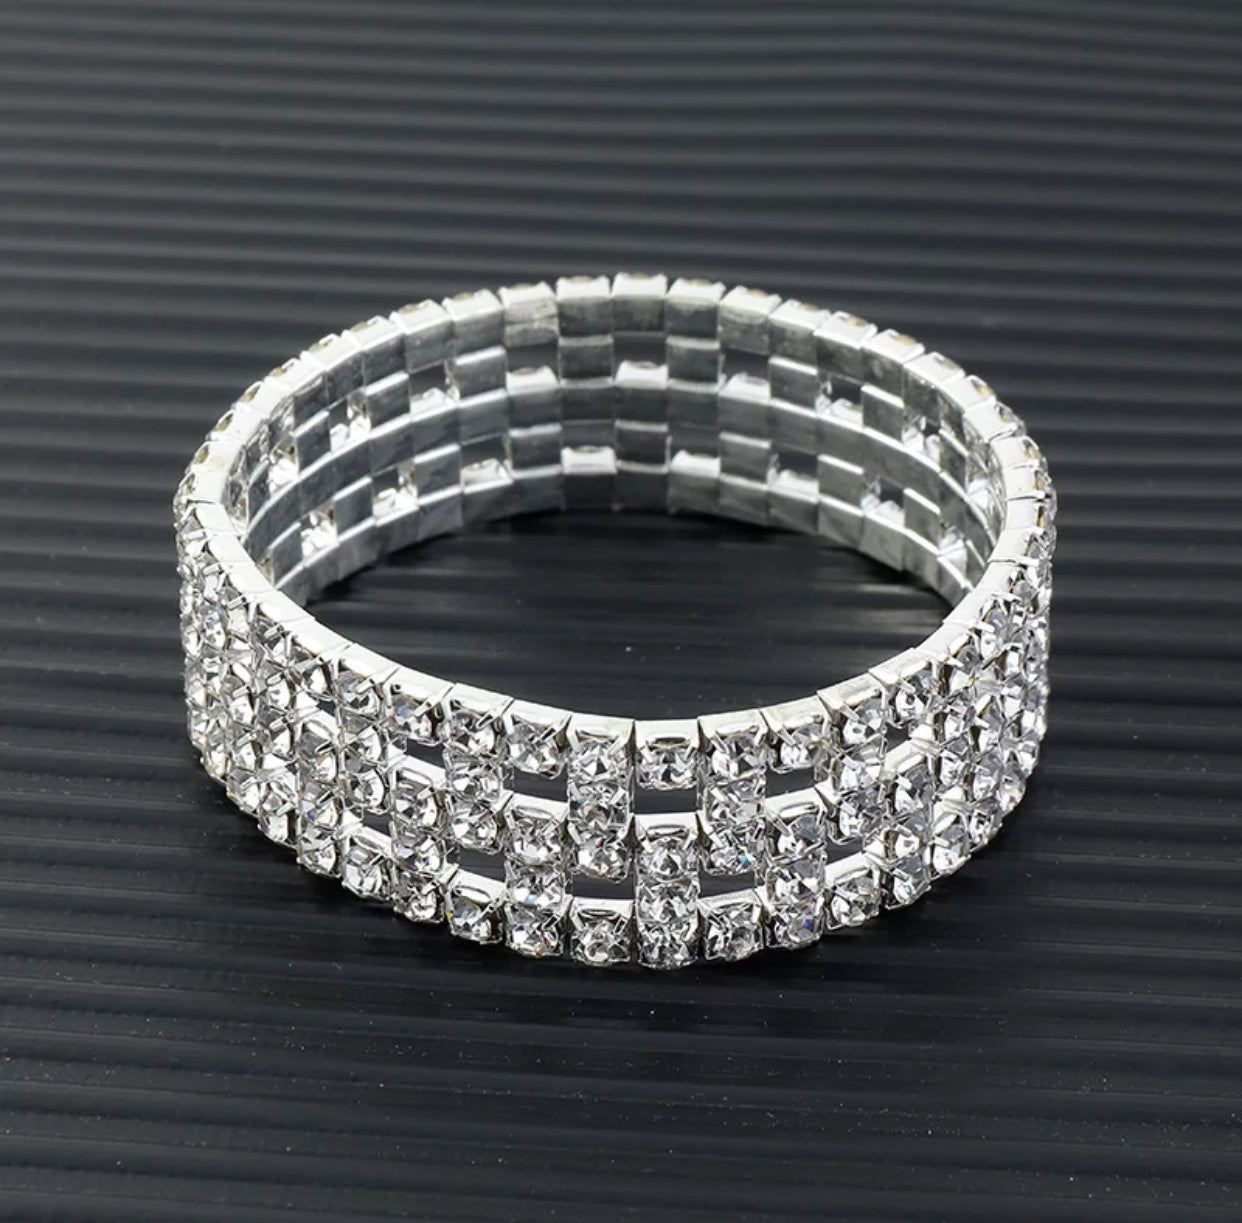 Baby Sharr - silver clear rhinestone mesh bracelet